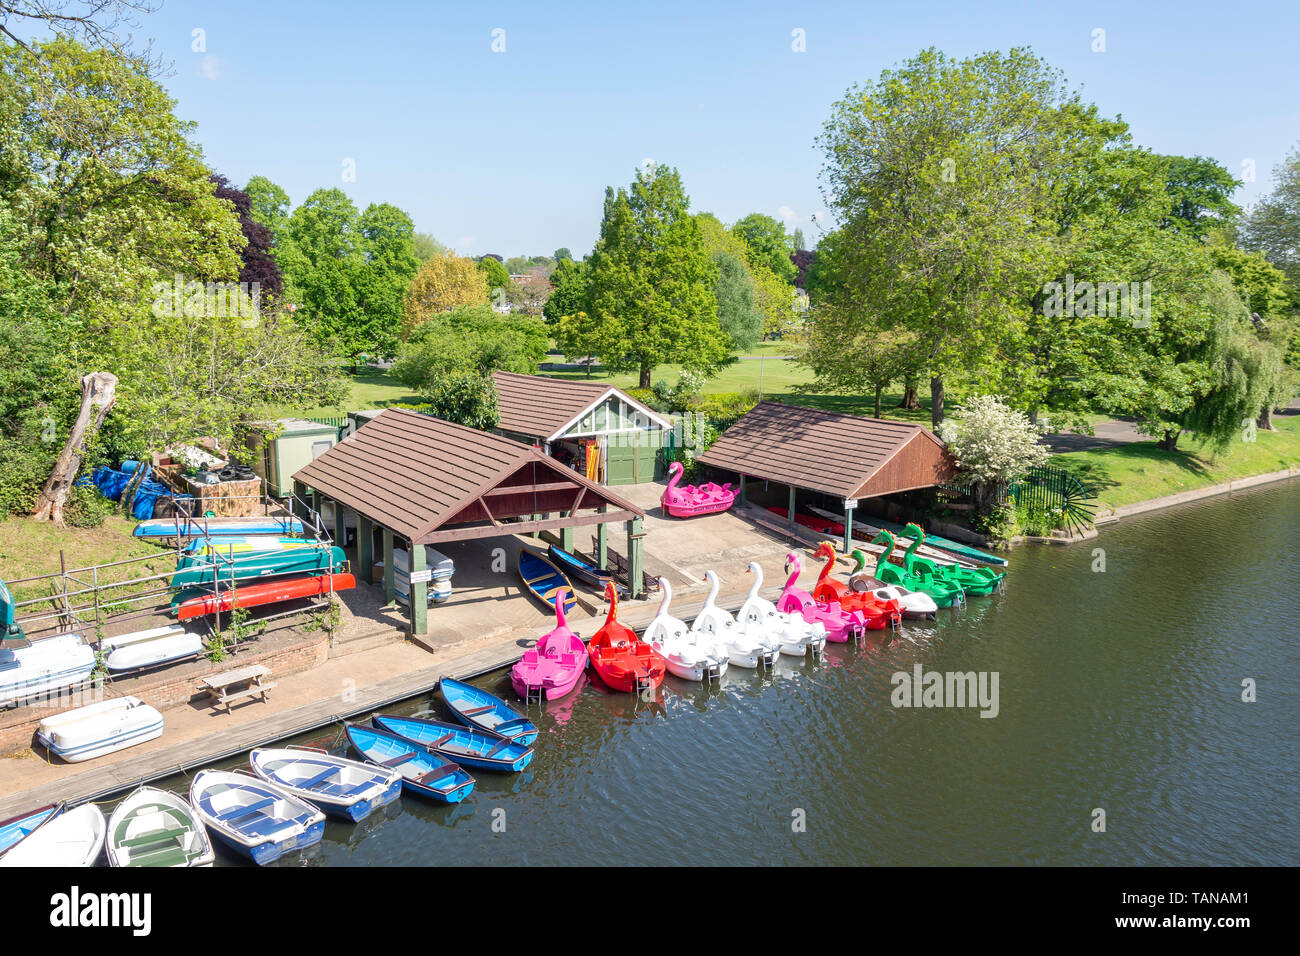 Hire boats on River Avon and St Nicholas Park, Warwick, Warwickshire, England, United Kingdom Stock Photo